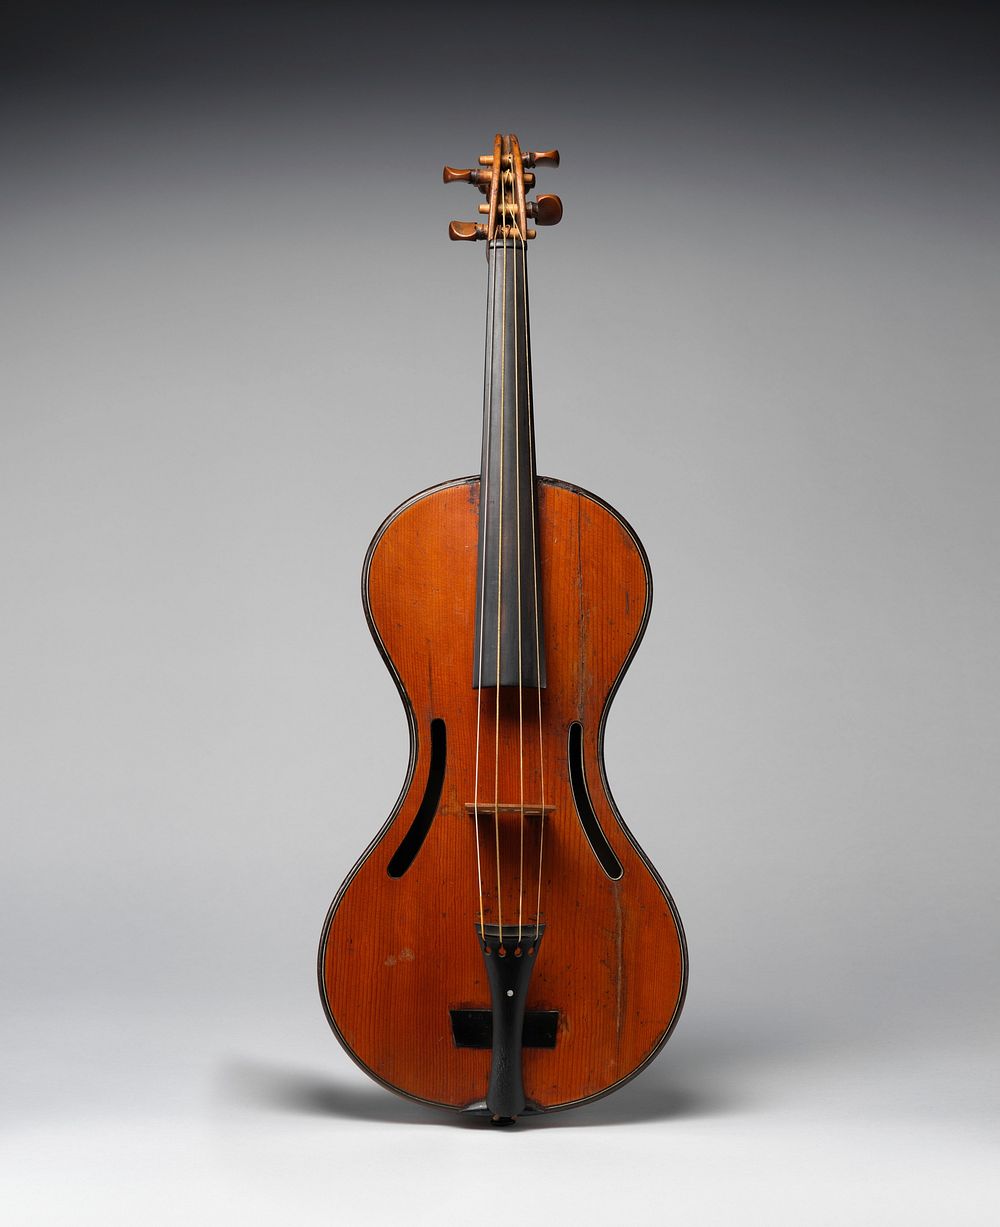 "Chanot model" Violin